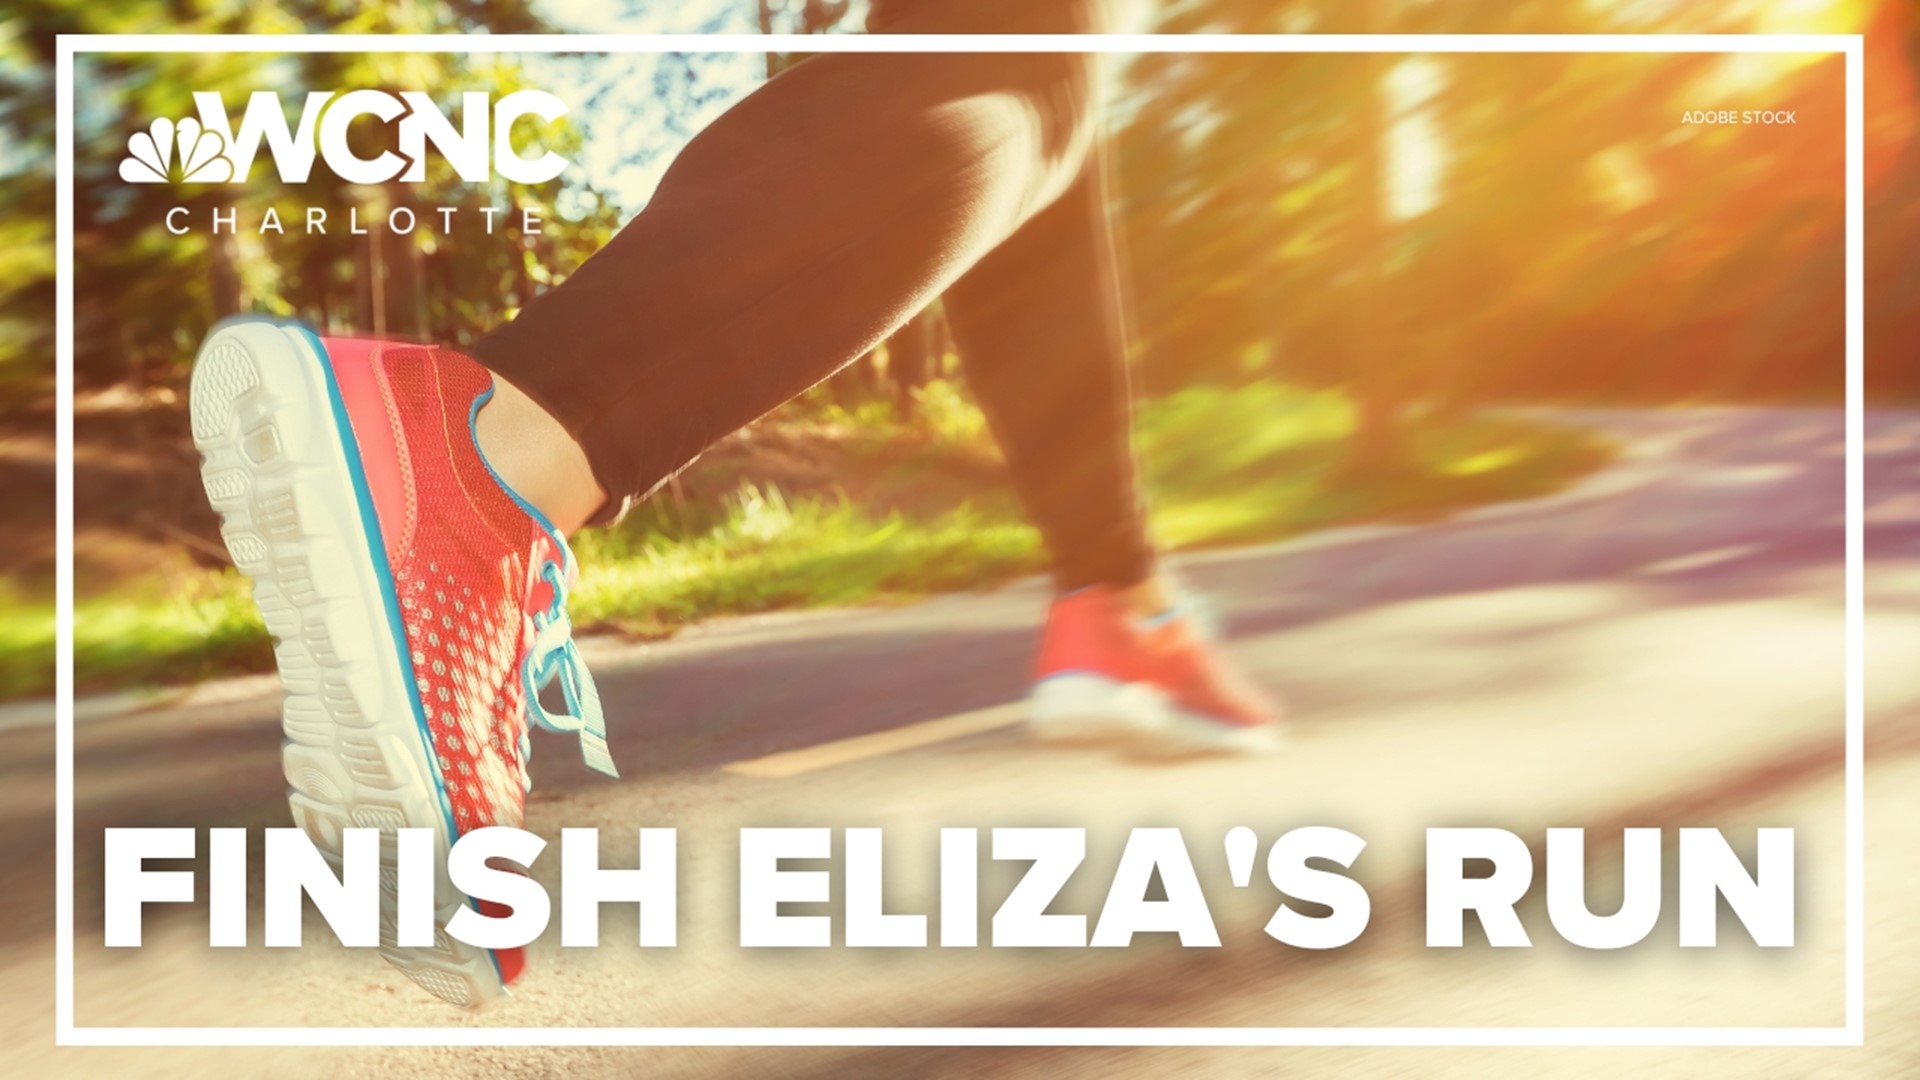 Run-Charlotte-Run is hosting a virtual run to honor Eliza Fletcher's life.